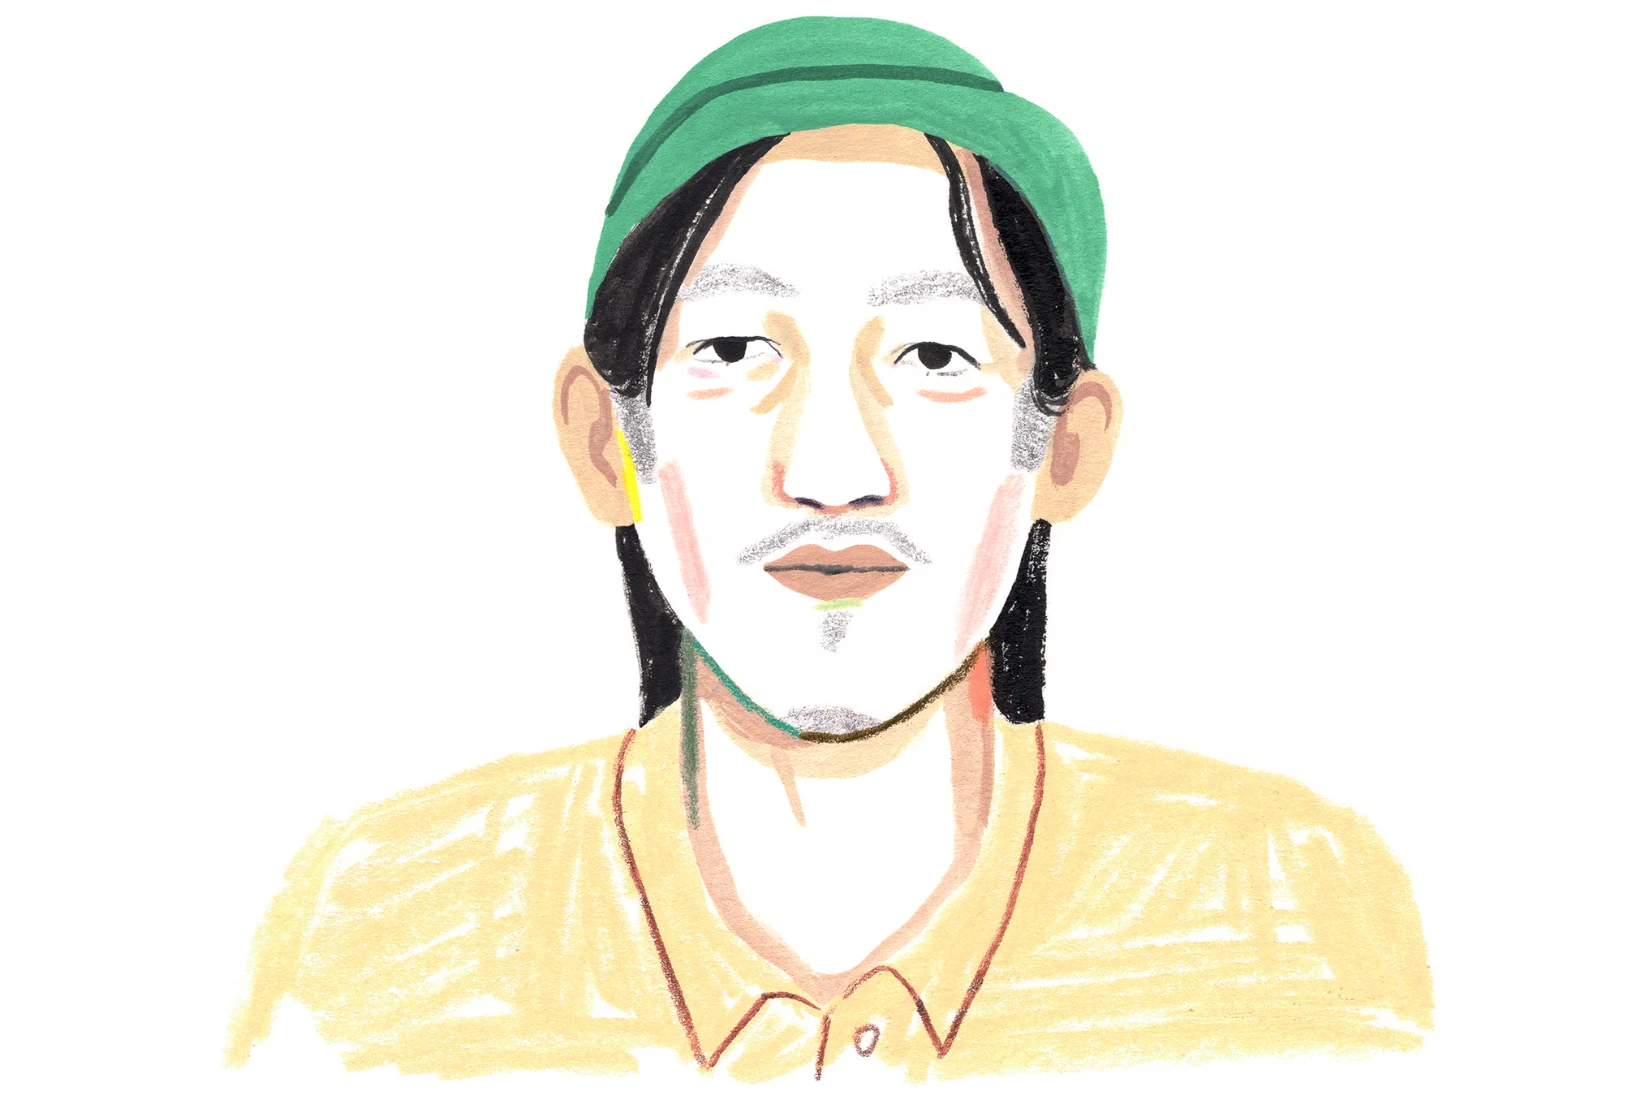 An illustration of an Asian man wearing a green hat. 